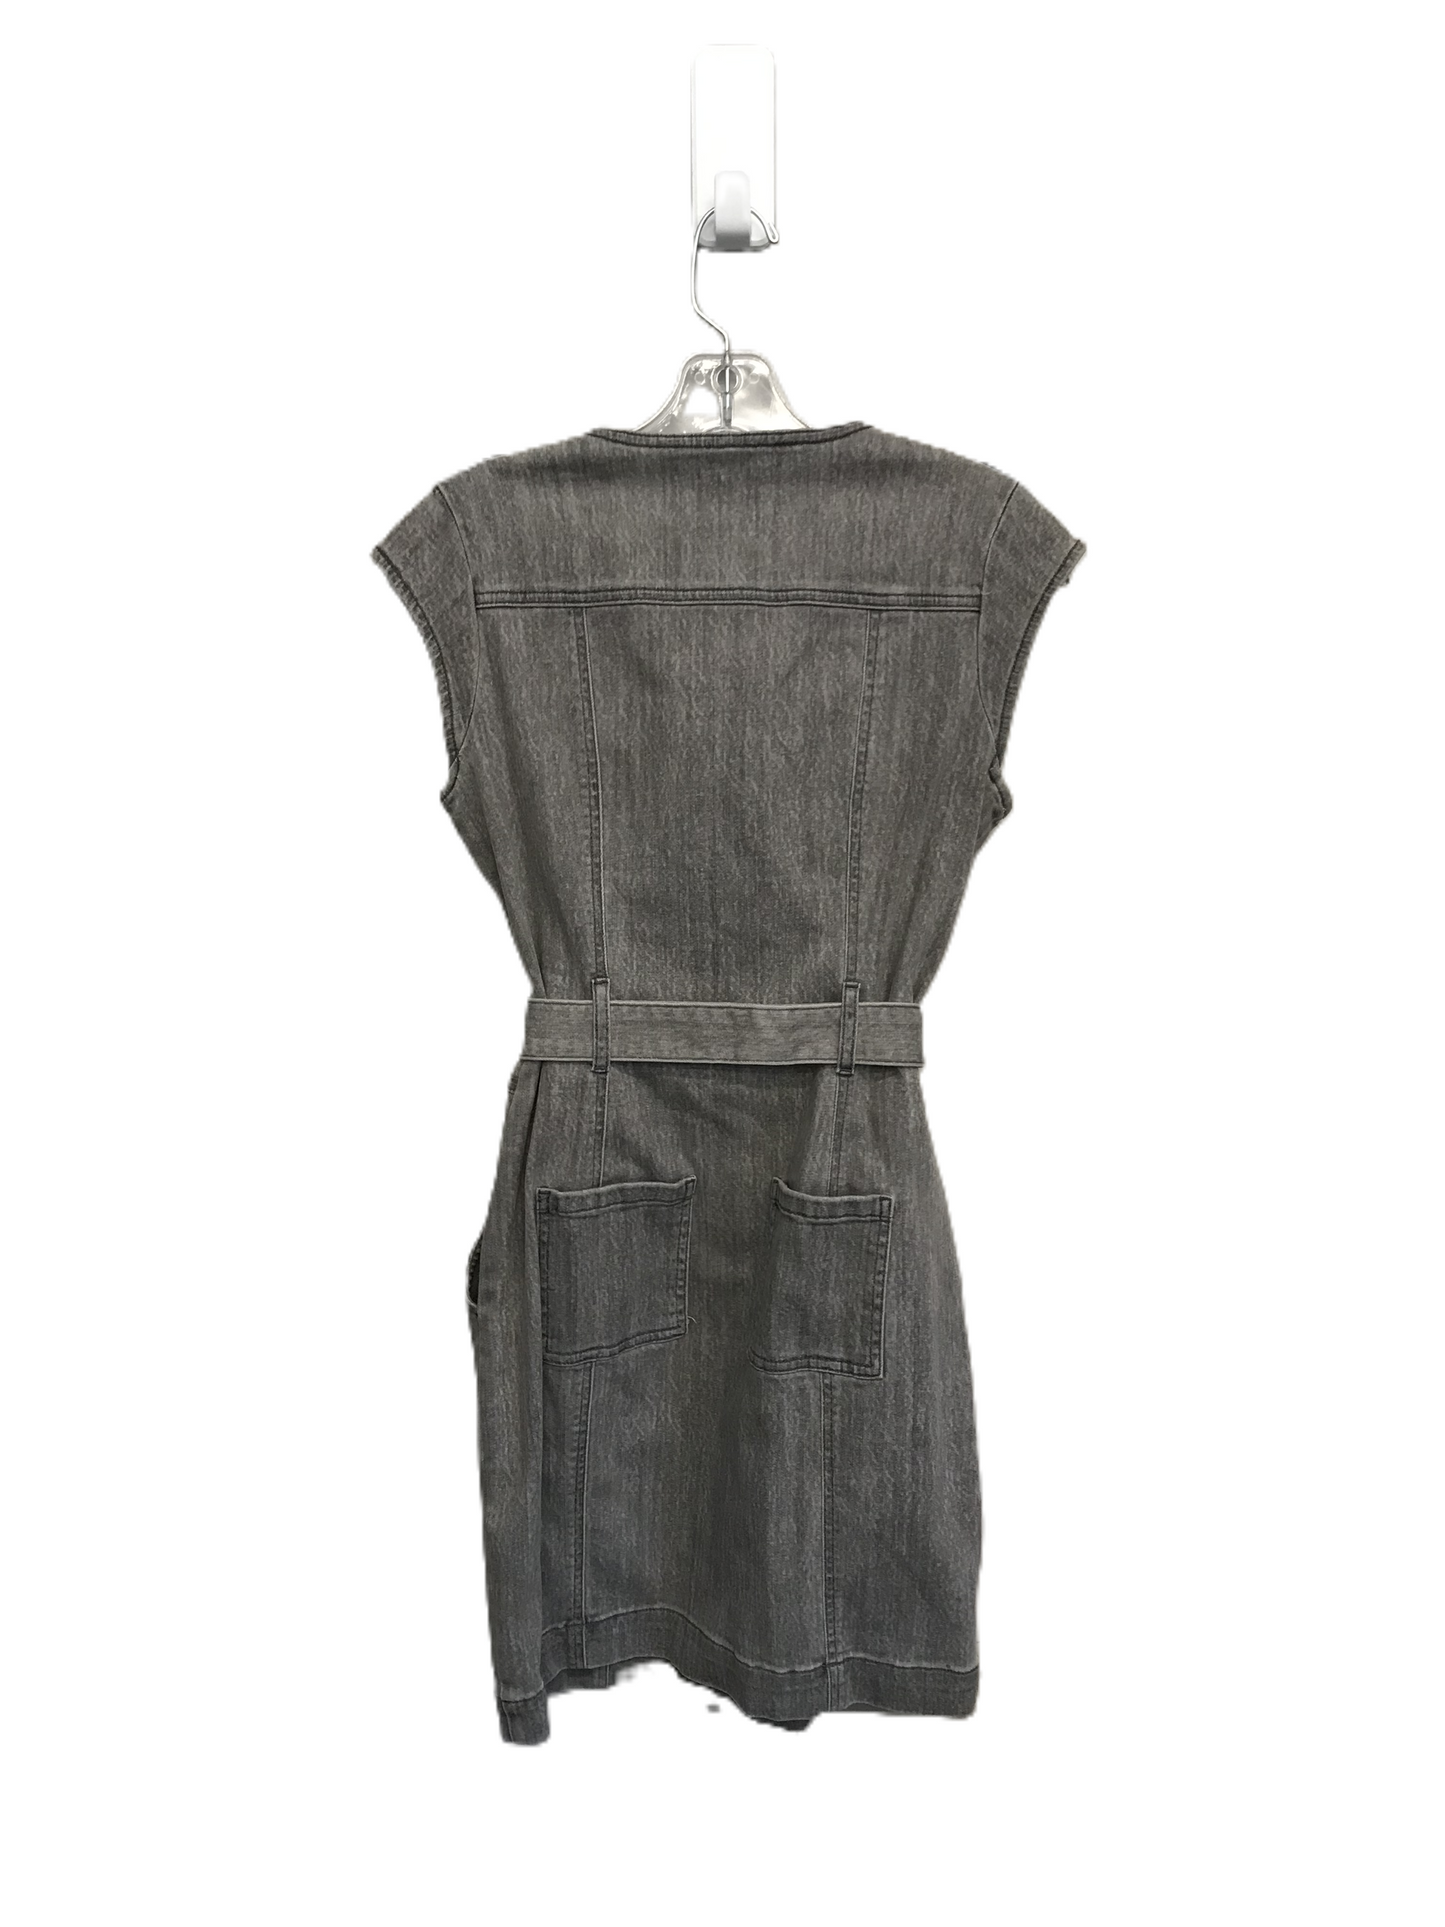 Grey Denim Dress Casual Short By White House Black Market, Size: Xs